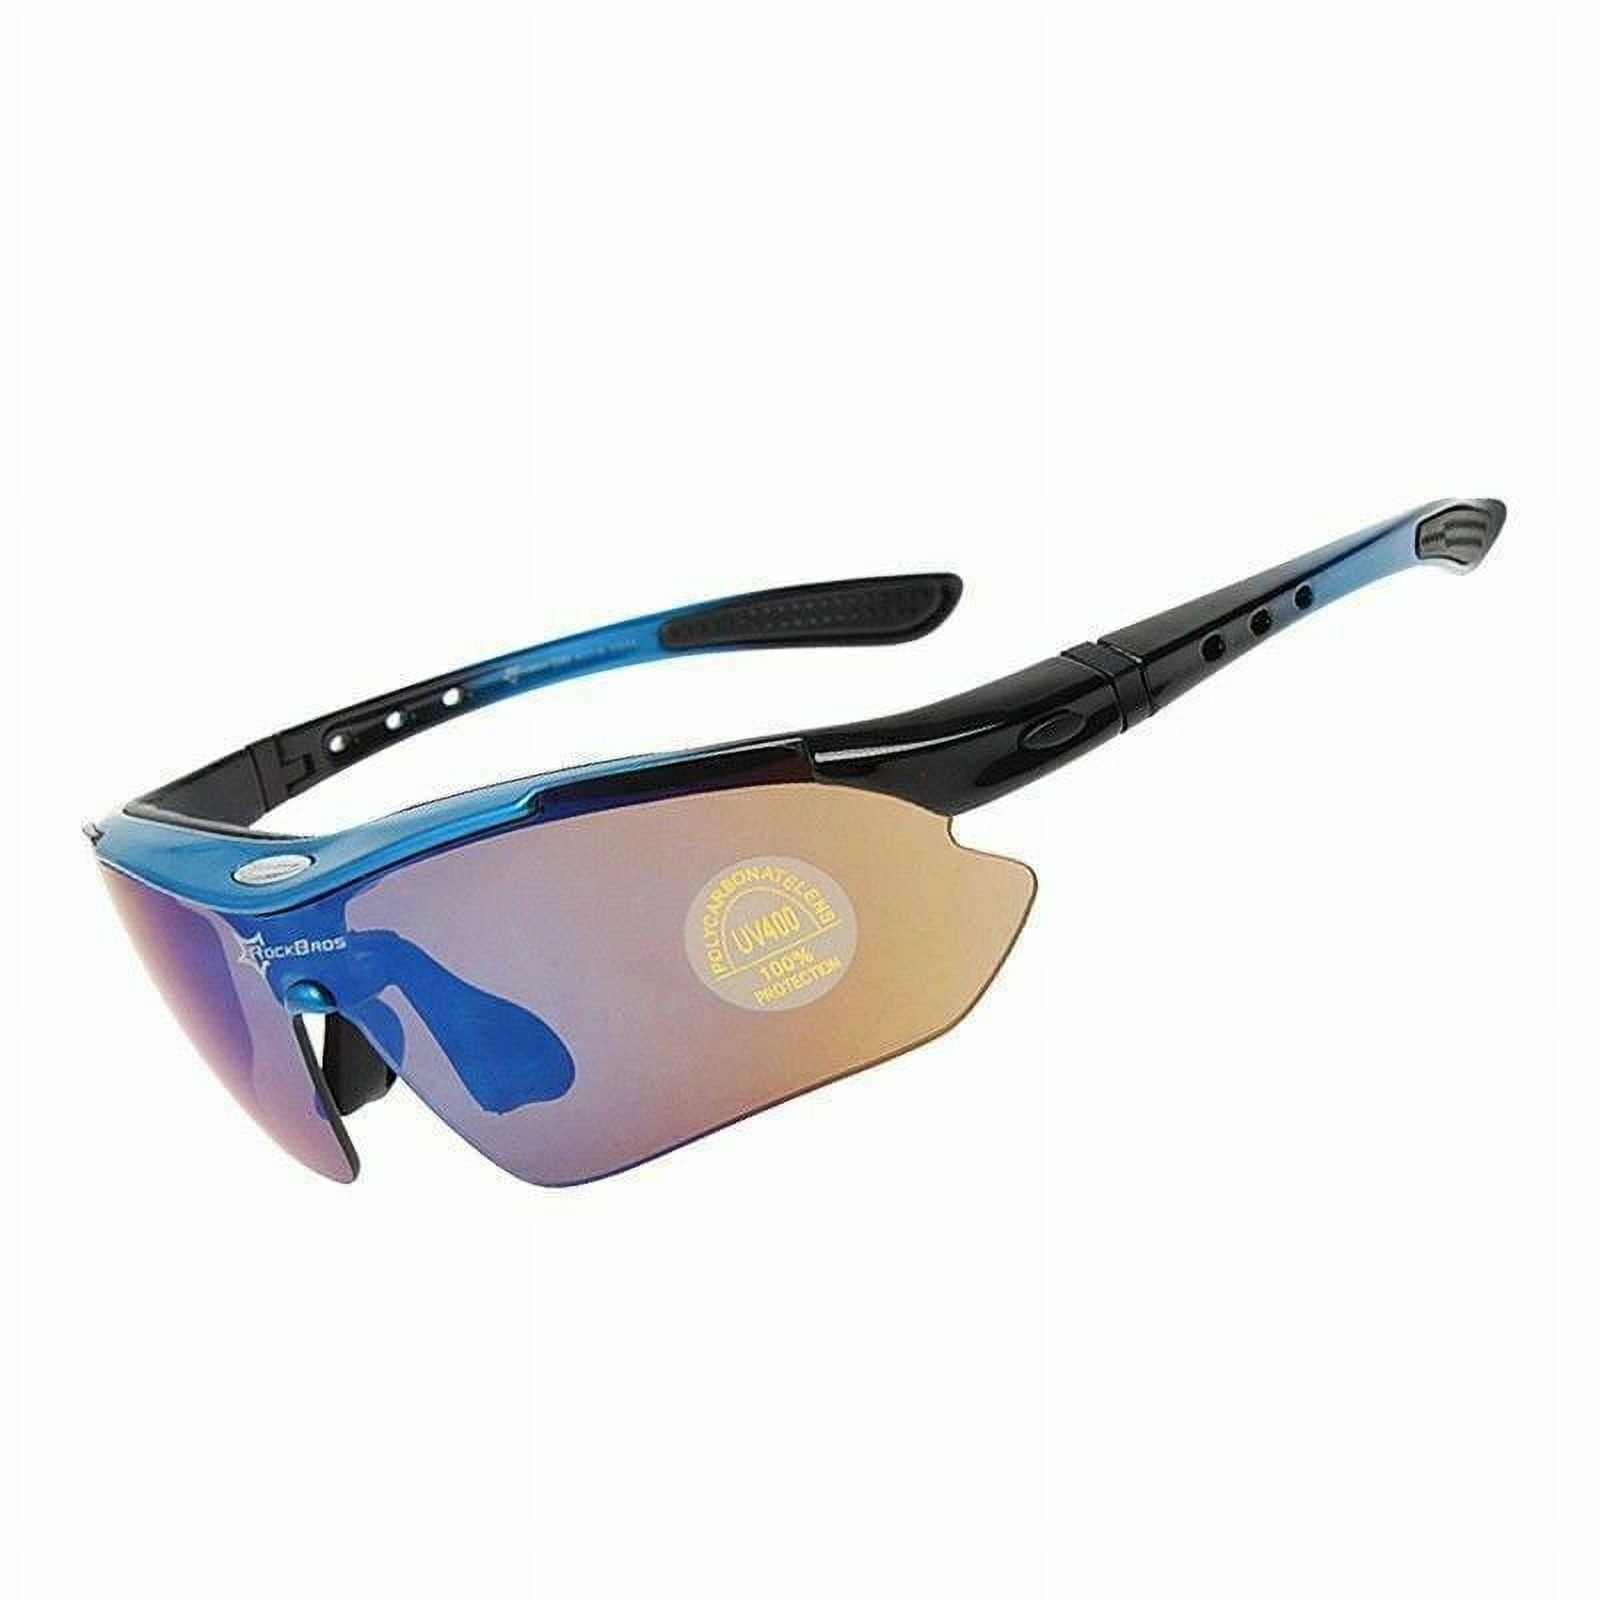 ROCKBROS Sport Sunglasses Men Women Cycling Glasses Polarized with 5 Lens and Myopia for Running Fishing Uv400, adult Unisex, Size: Regular, Blue